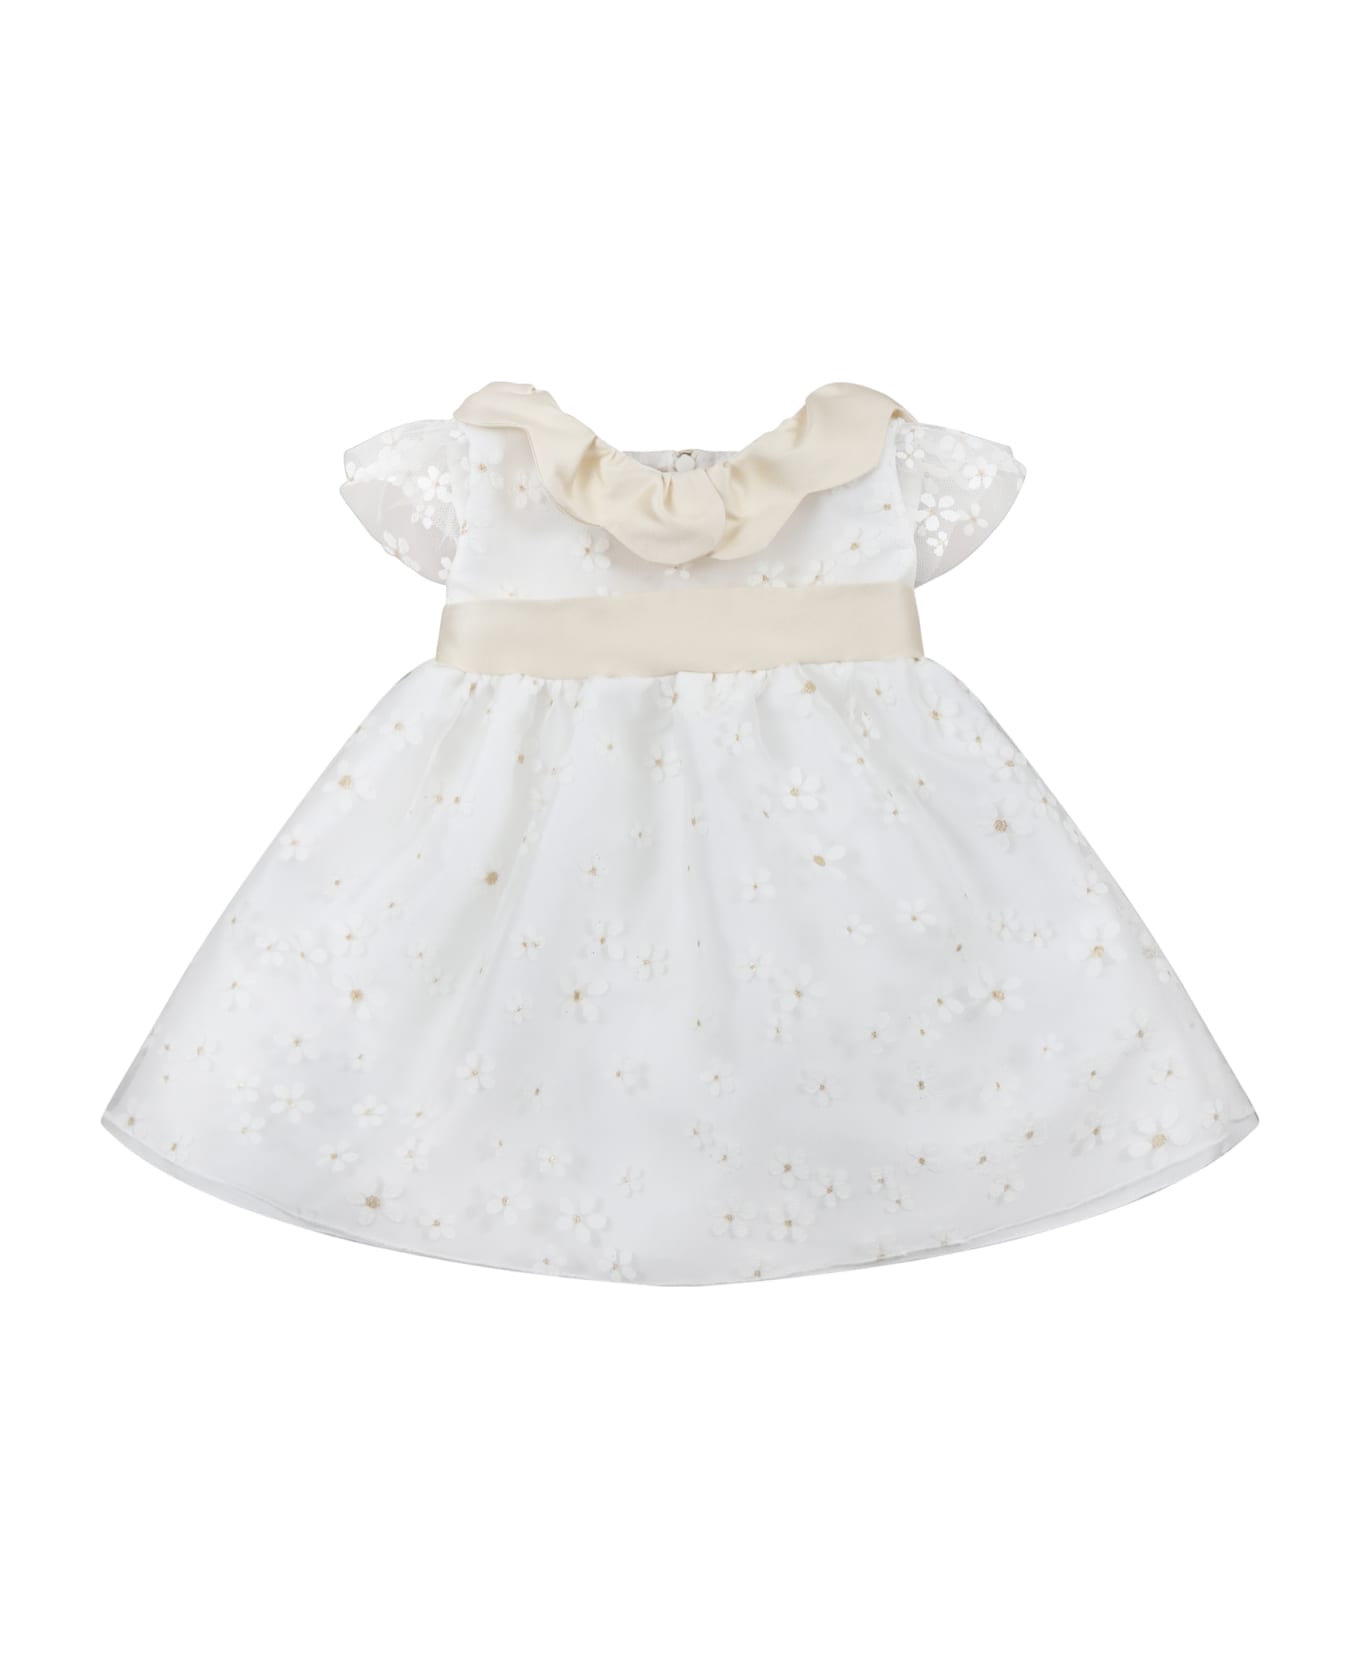 La stupenderia White Sleeveless Dress For Baby Girl With Daisies - White